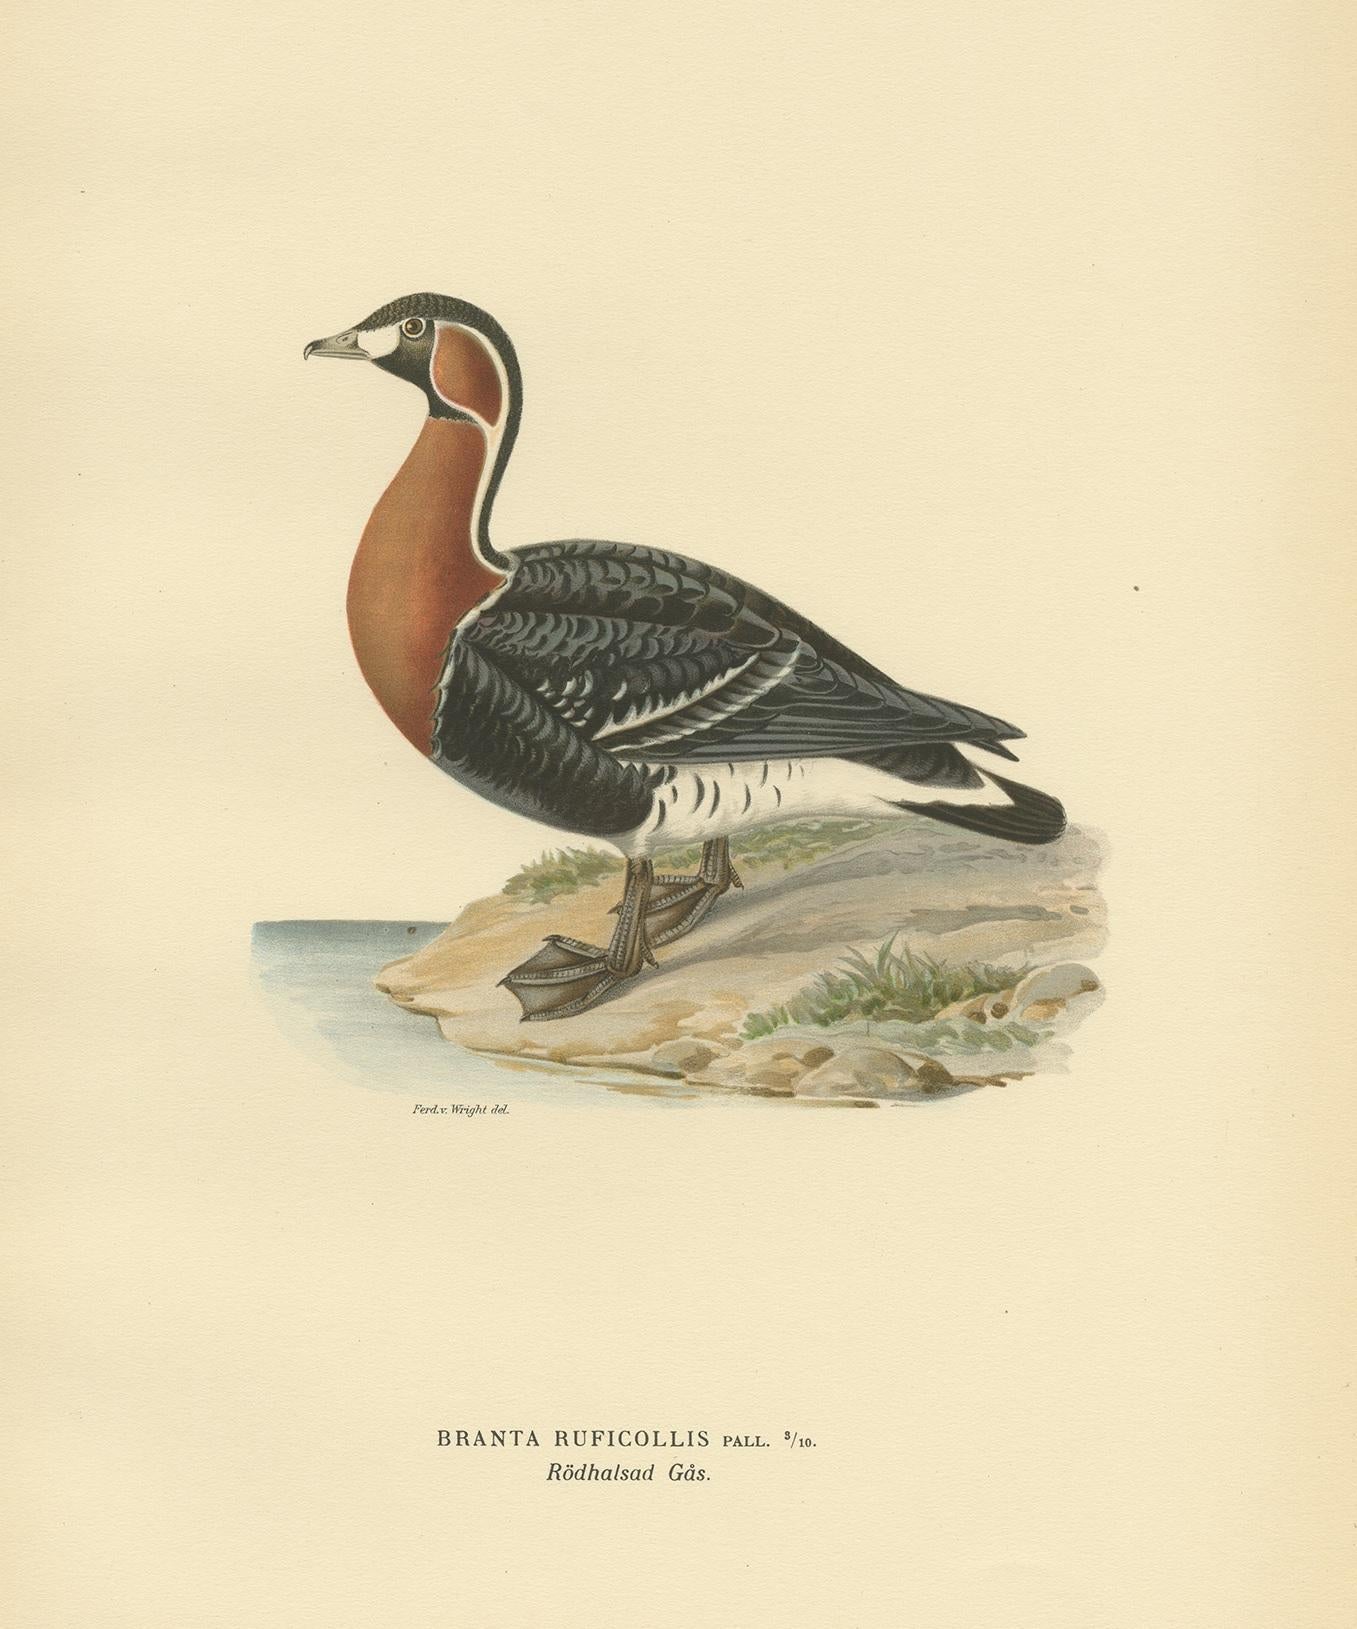 Antique bird print titled 'Branta Ruficollis'. Old bird print depicting the red-breasted goose. This print originates from 'Svenska Foglar Efter Naturen Och Pa Stenritade' by Magnus von Wright.